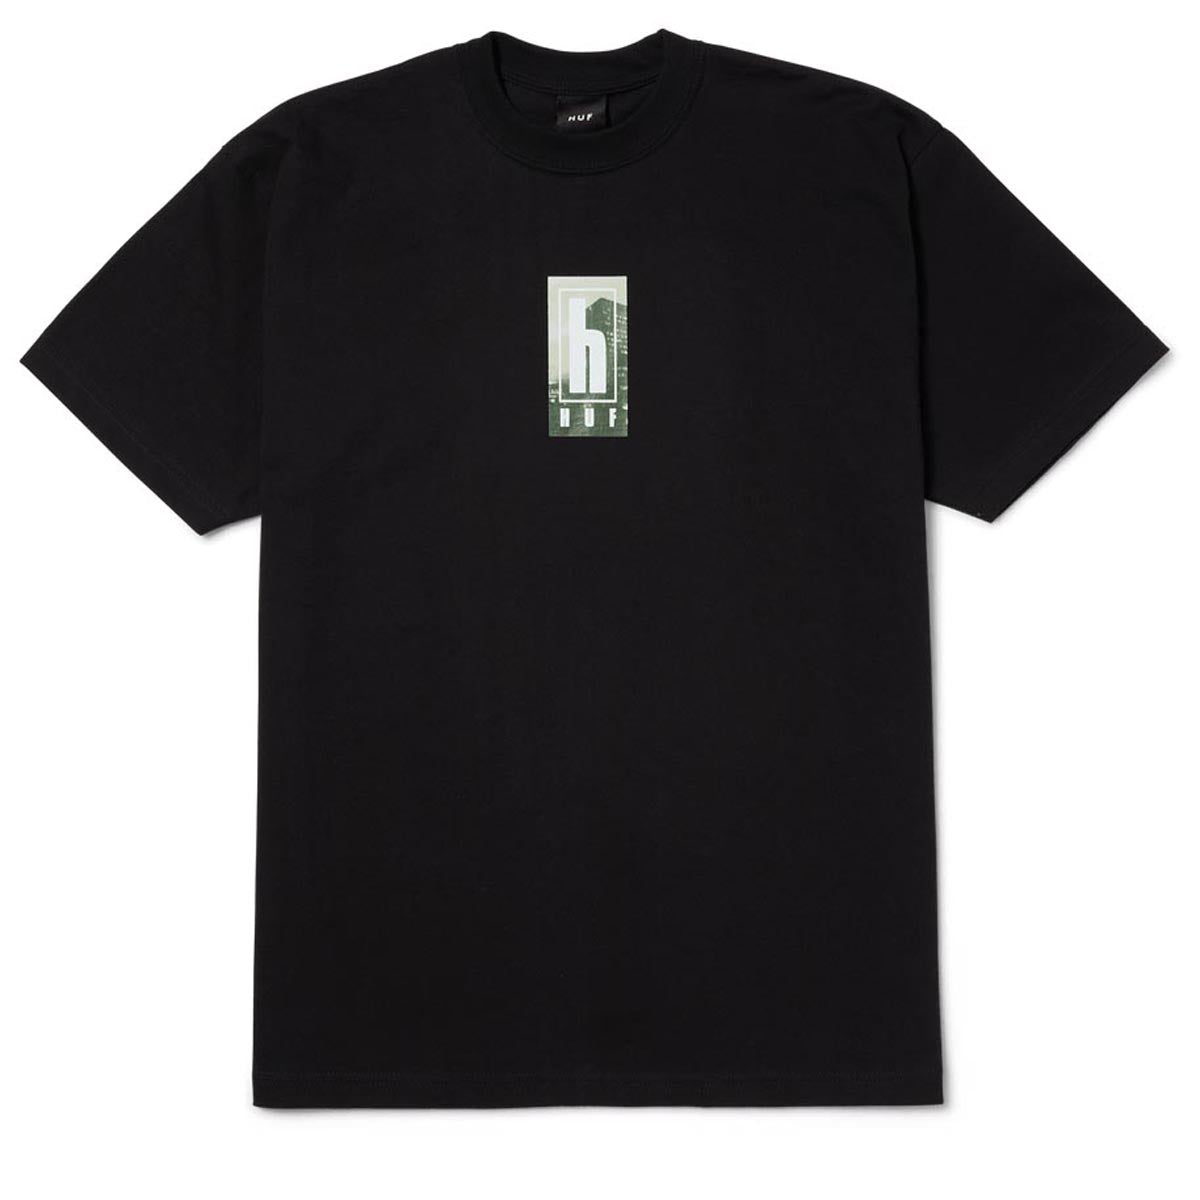 HUF Roads T-Shirt - Black image 1